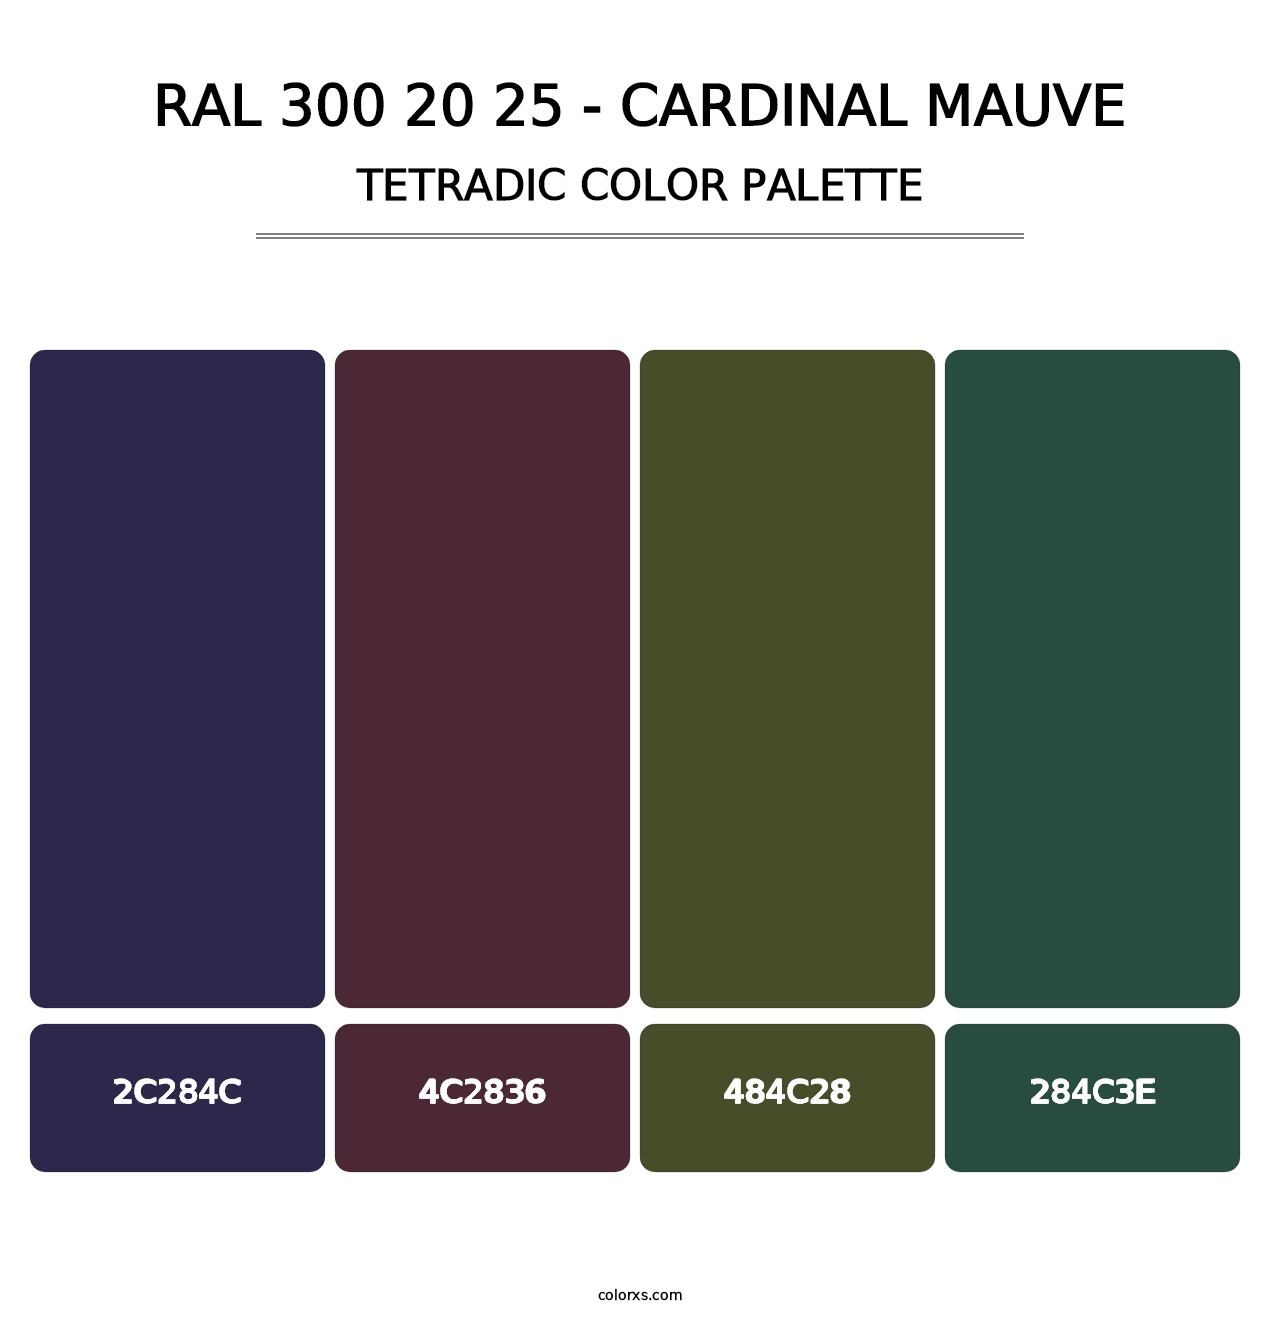 RAL 300 20 25 - Cardinal Mauve - Tetradic Color Palette